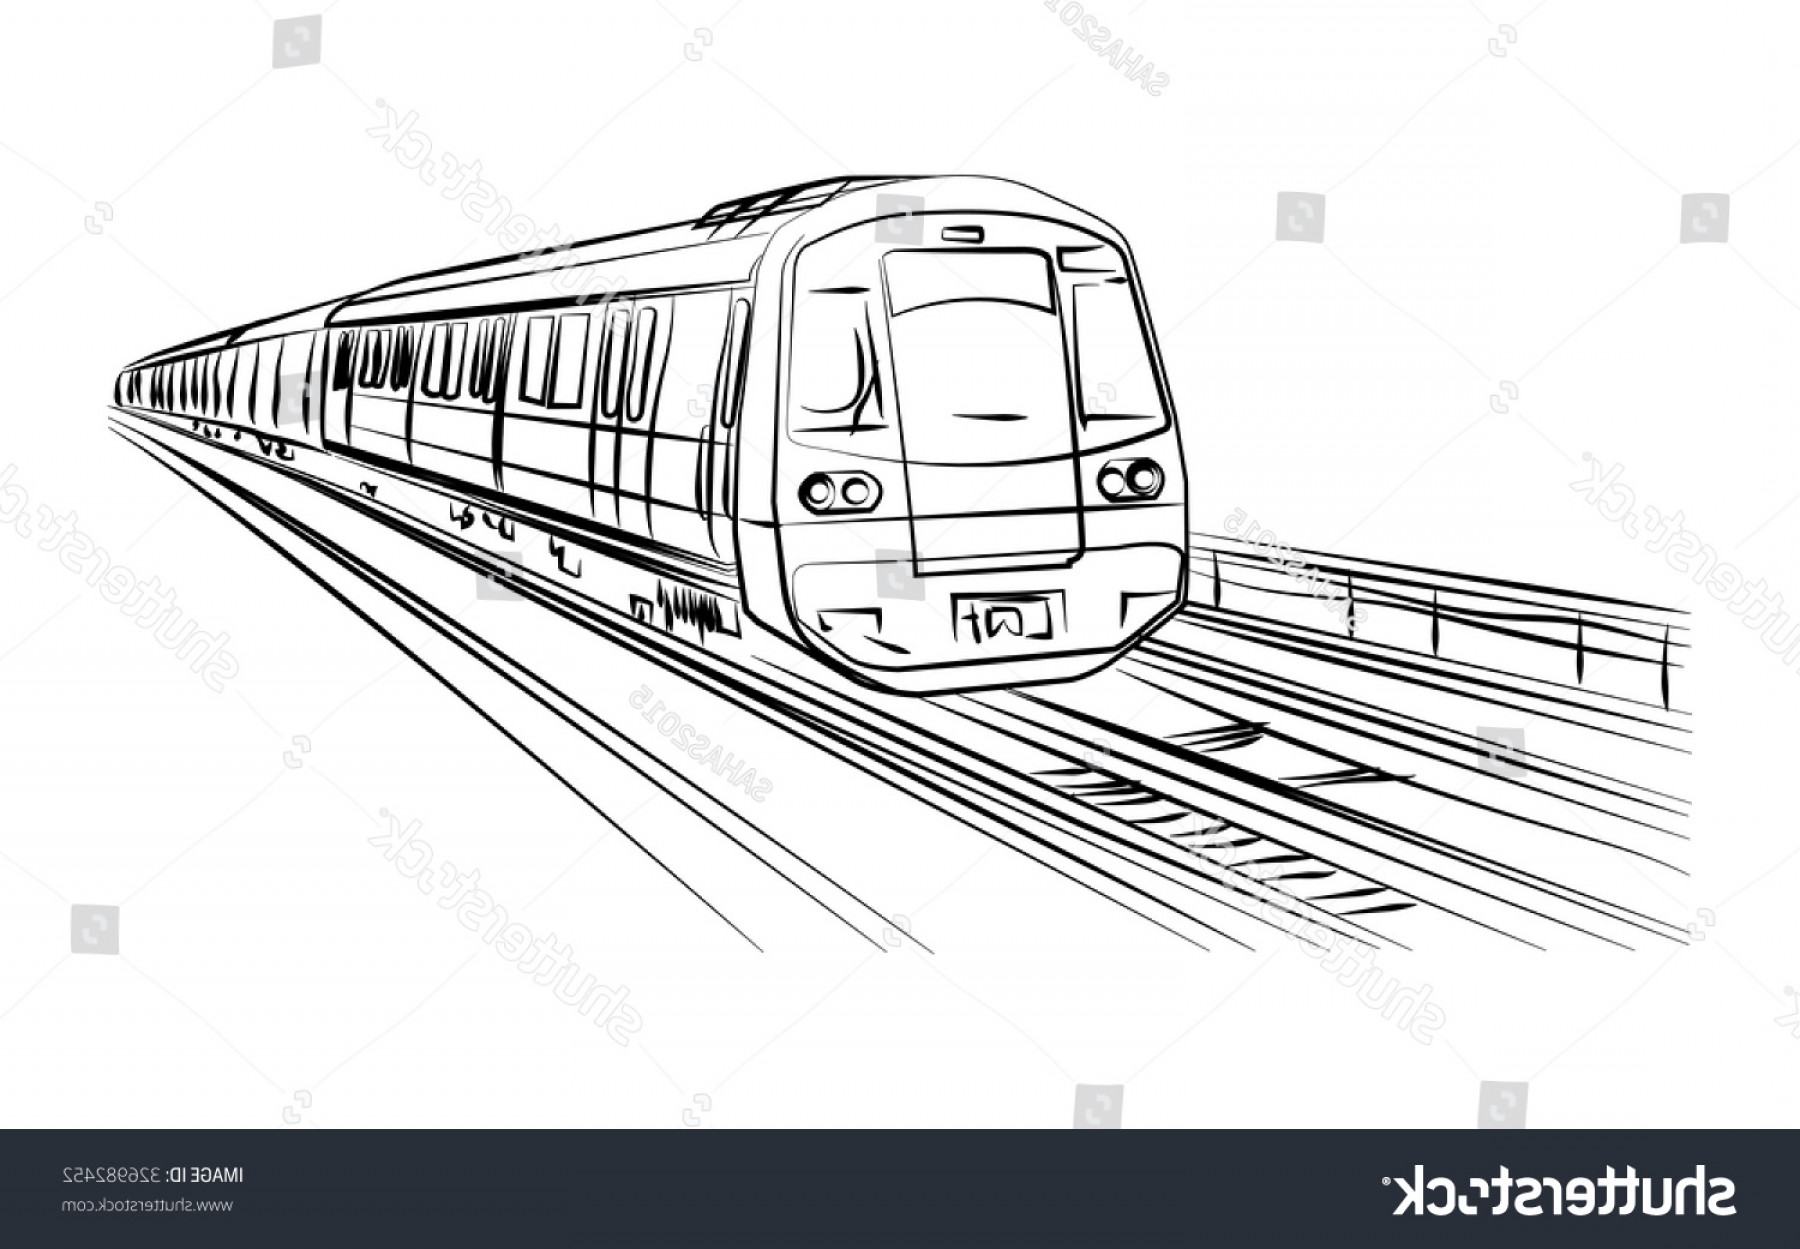 seeing a train sketch